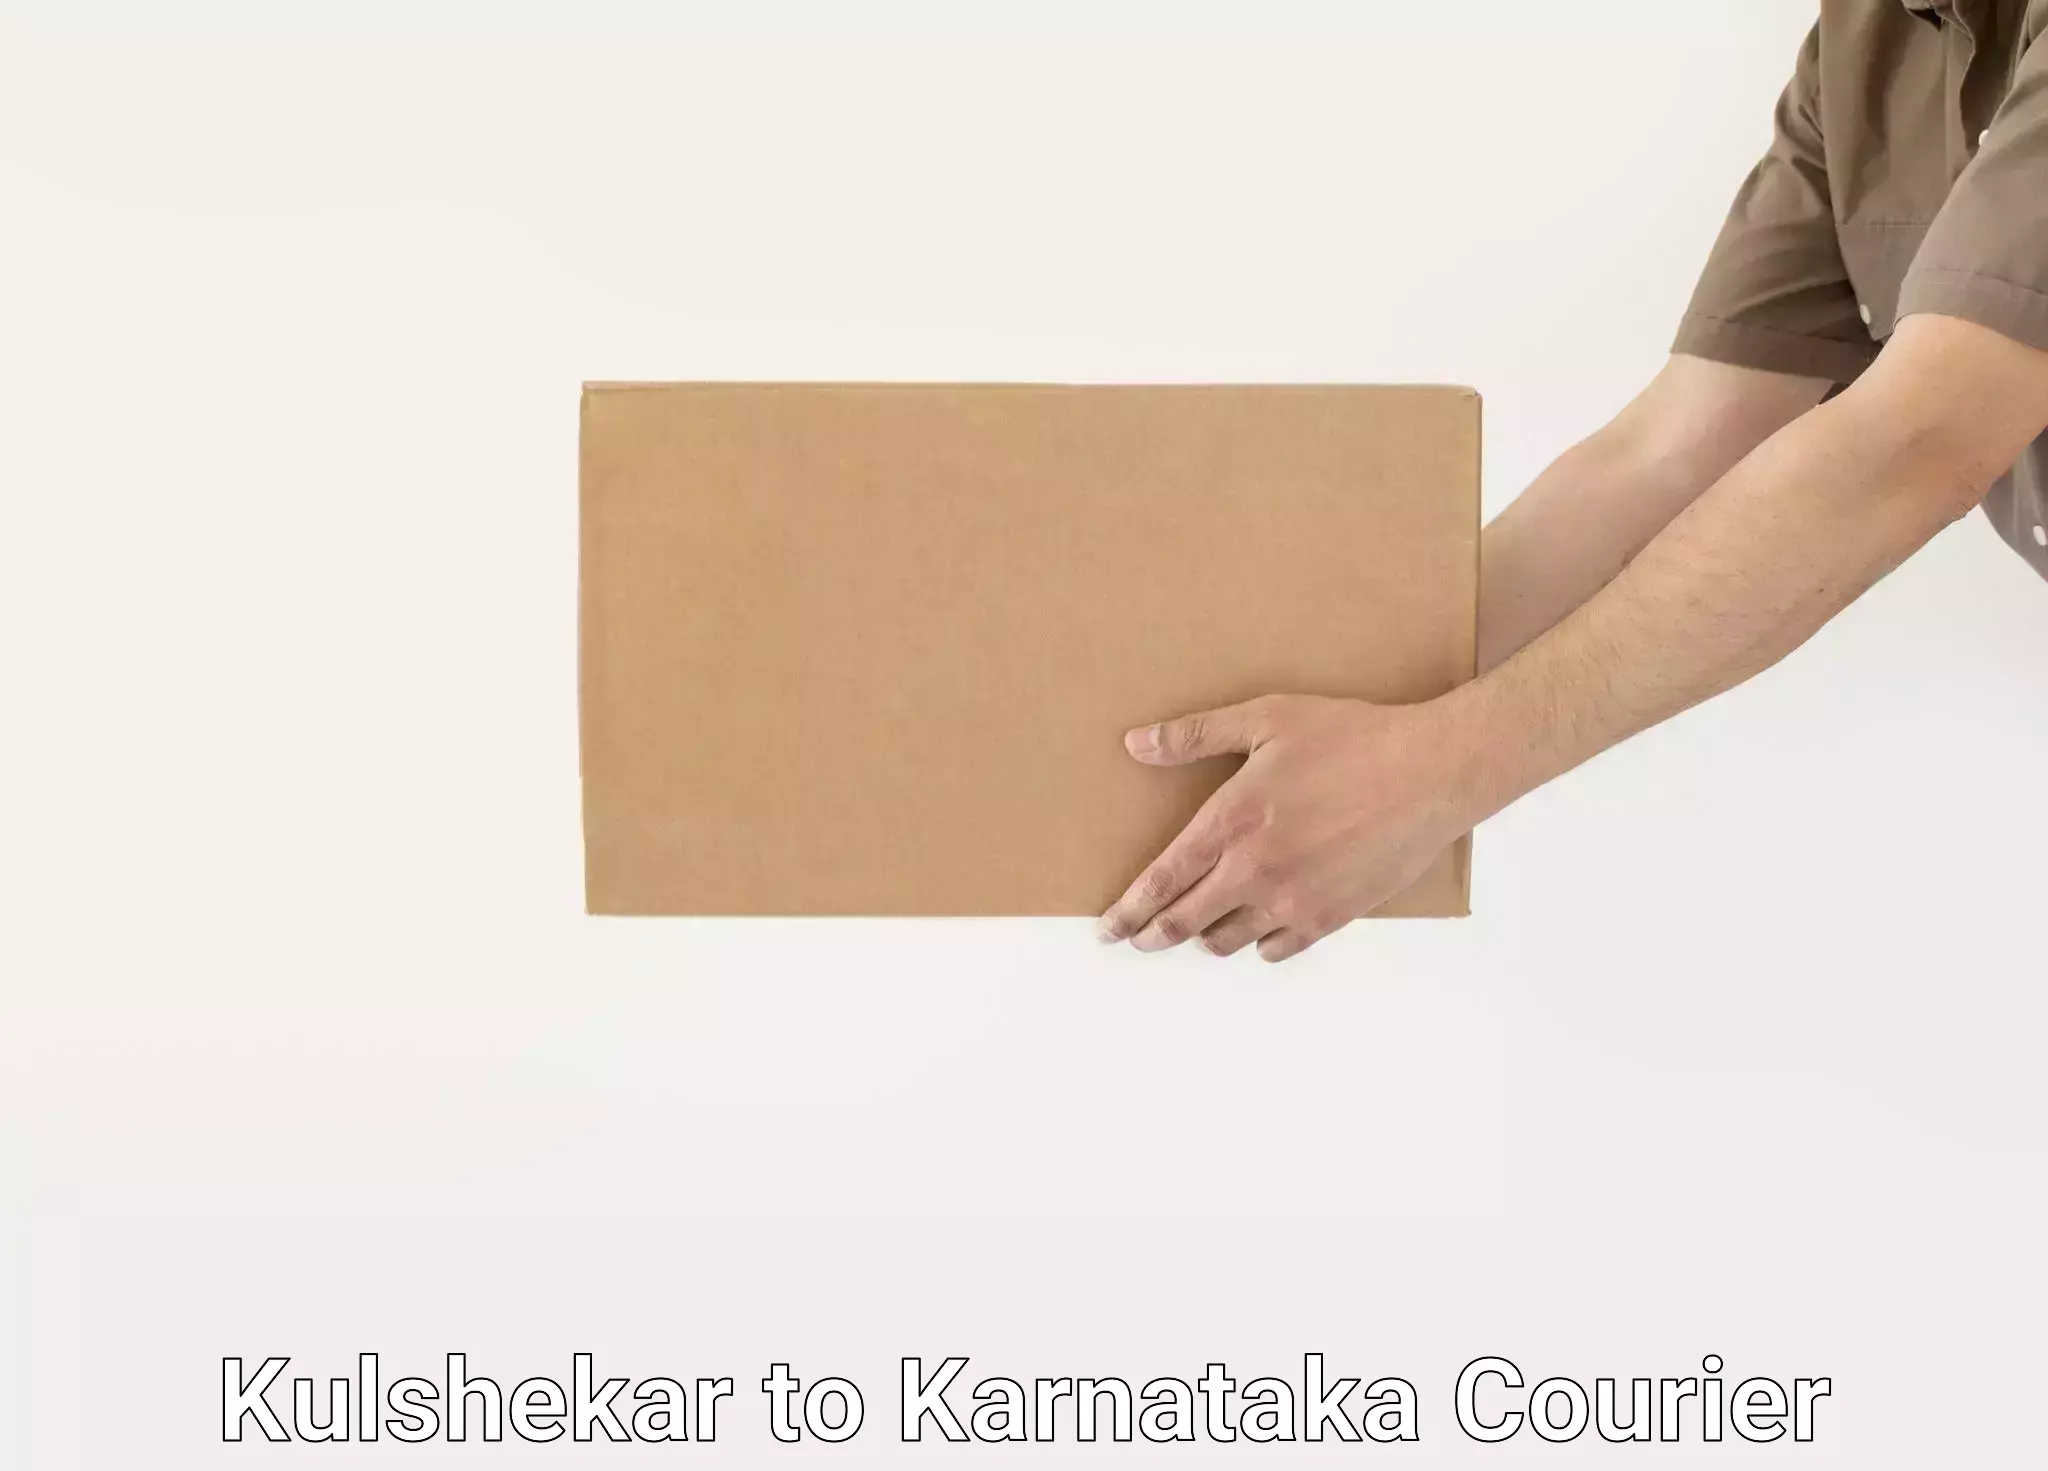 Moving and handling services Kulshekar to Karnataka